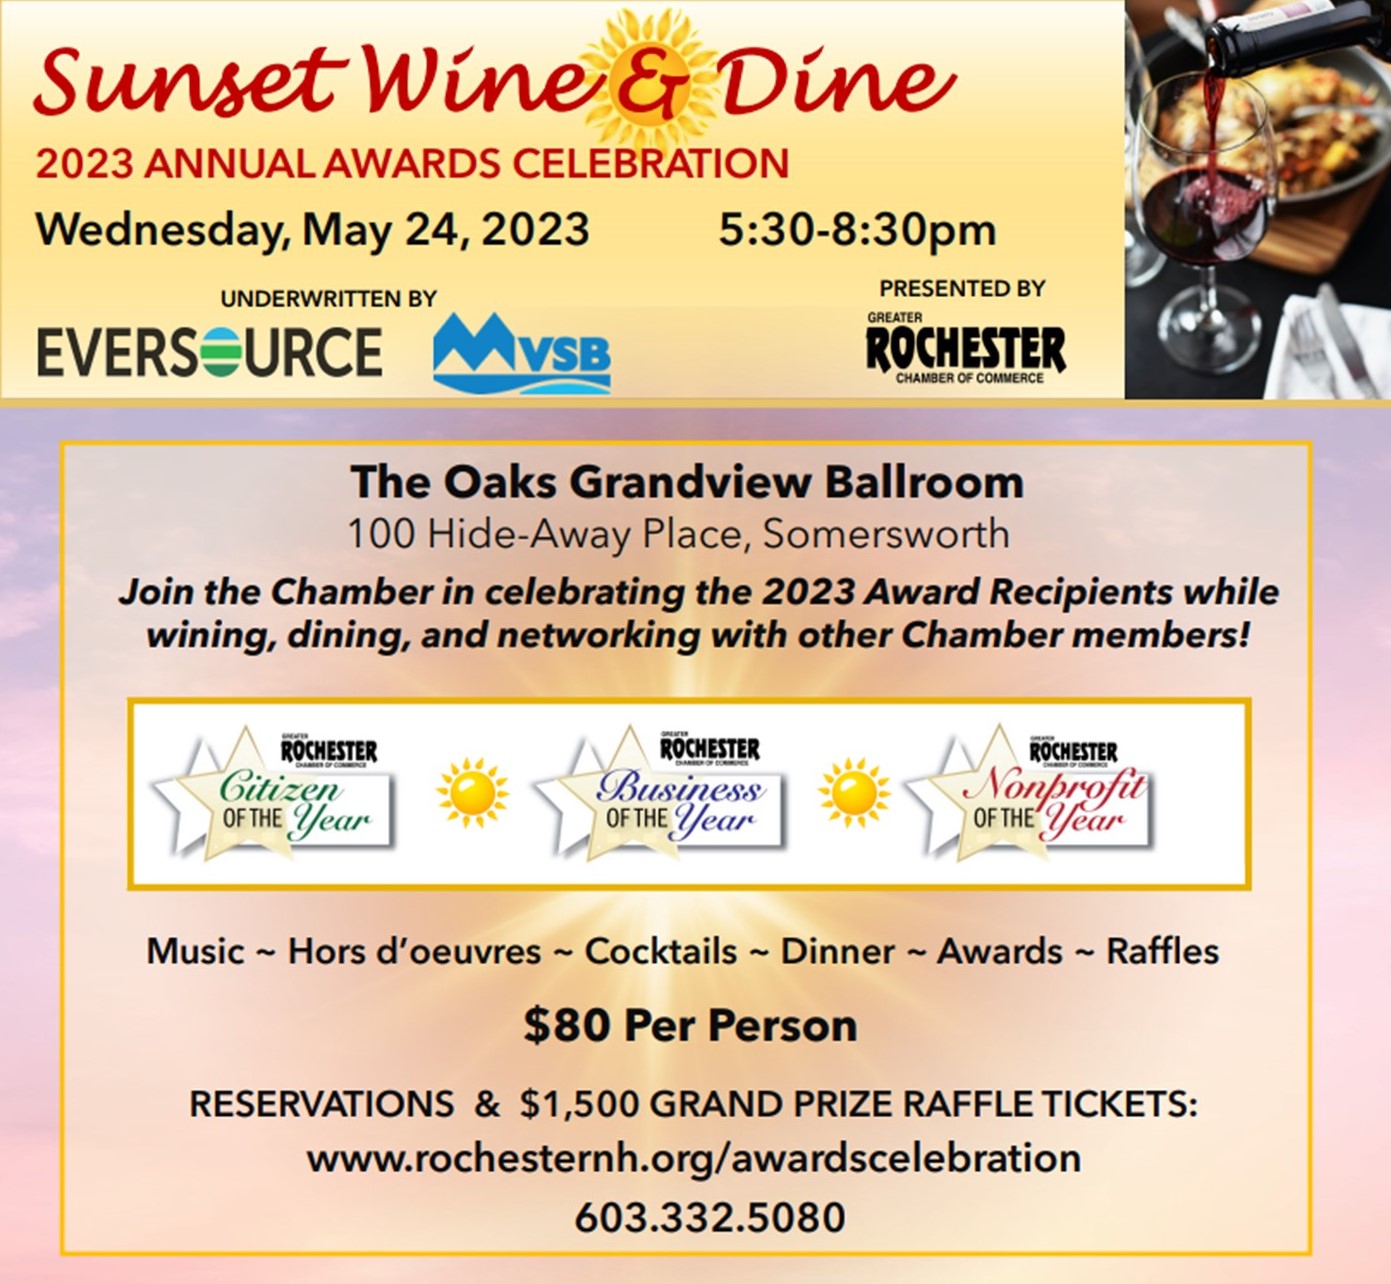 Sunset Wine & Dine Annual Awards Celebration